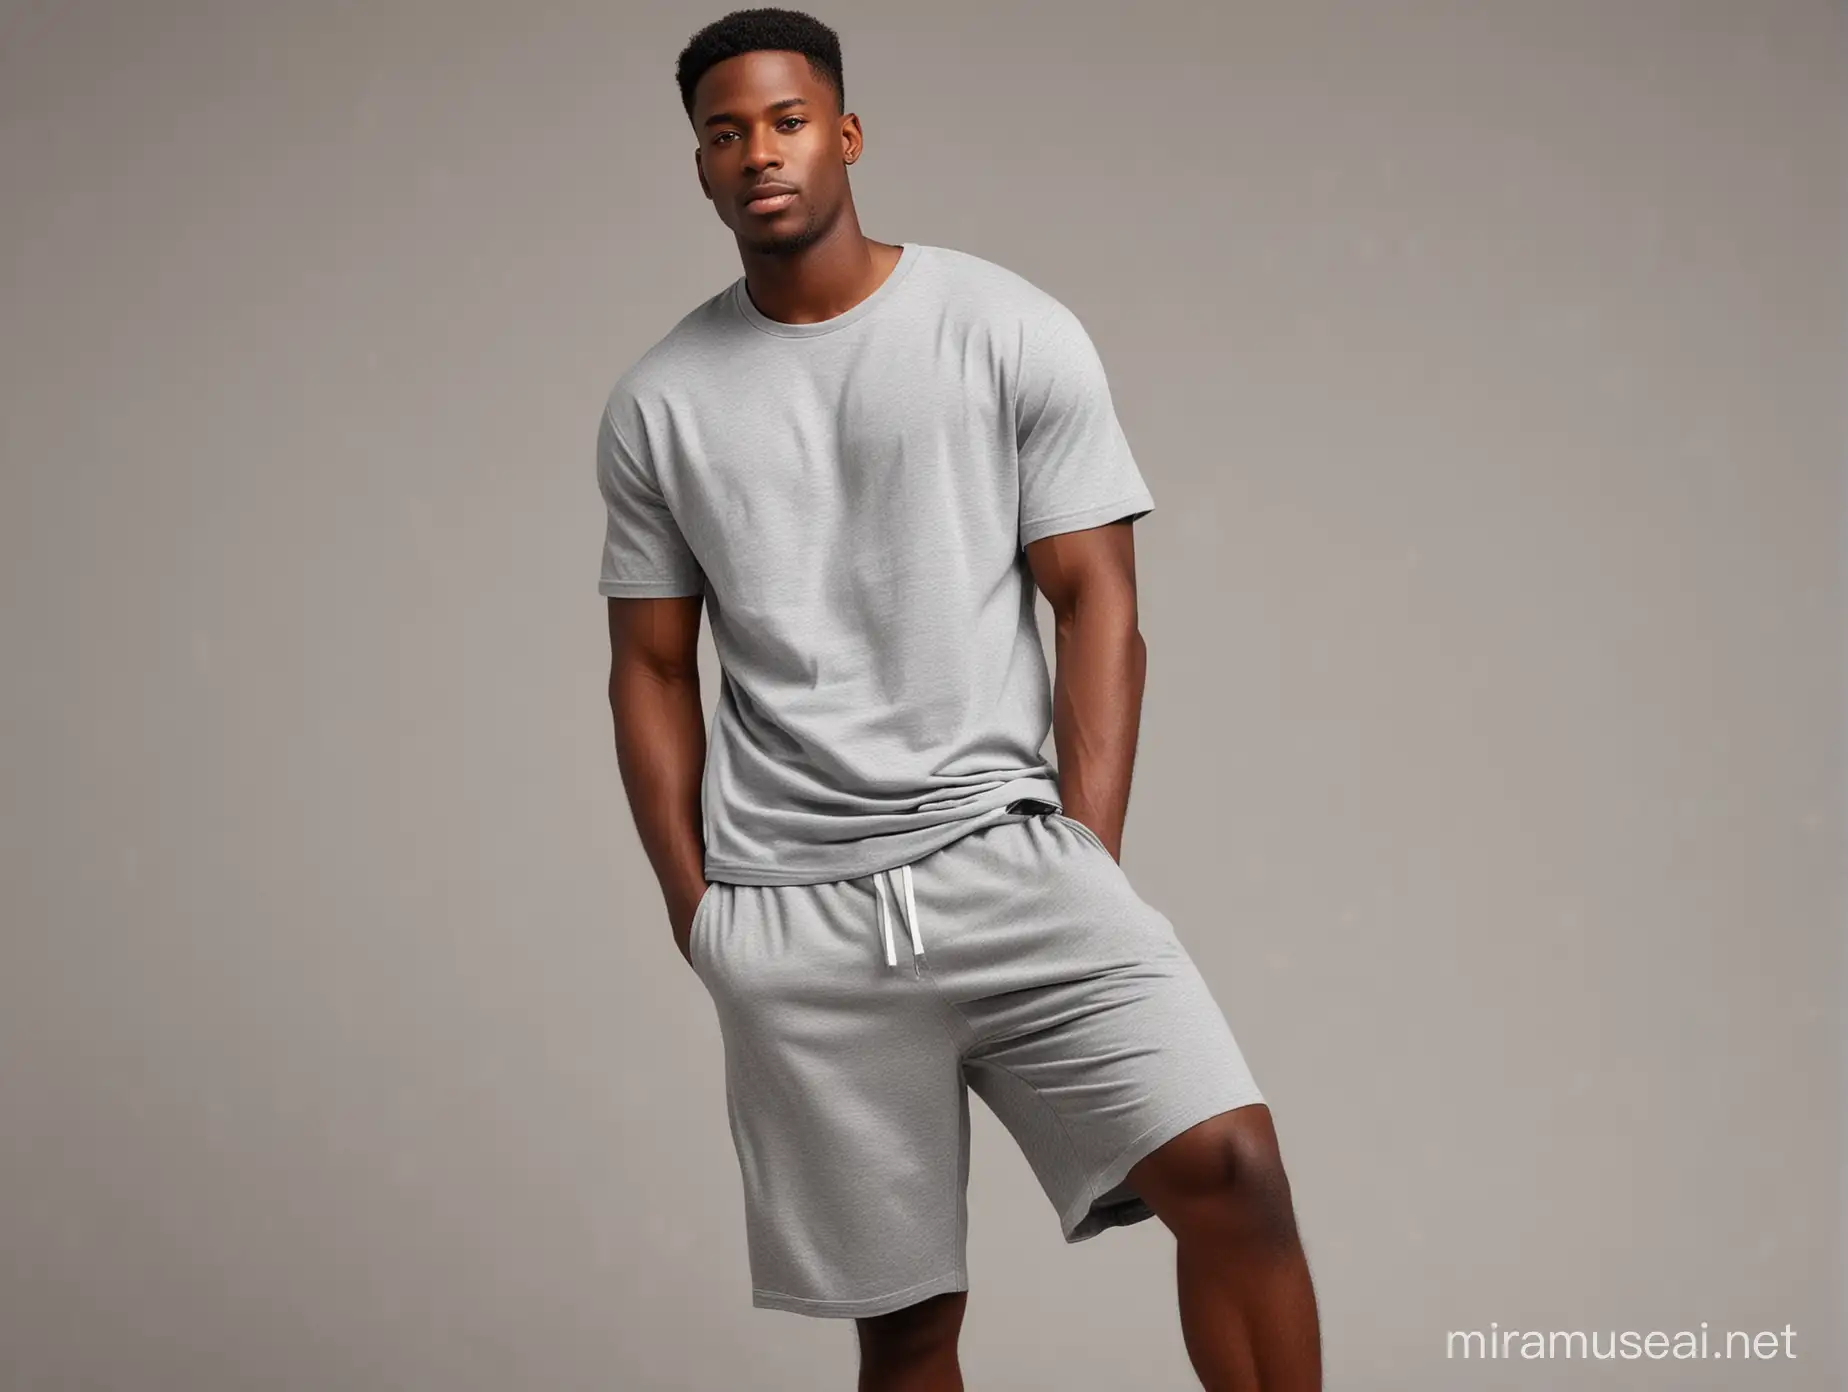  black man model full body wearing a plain short sleeve grey t-shirt with plain  grey SHORTS on